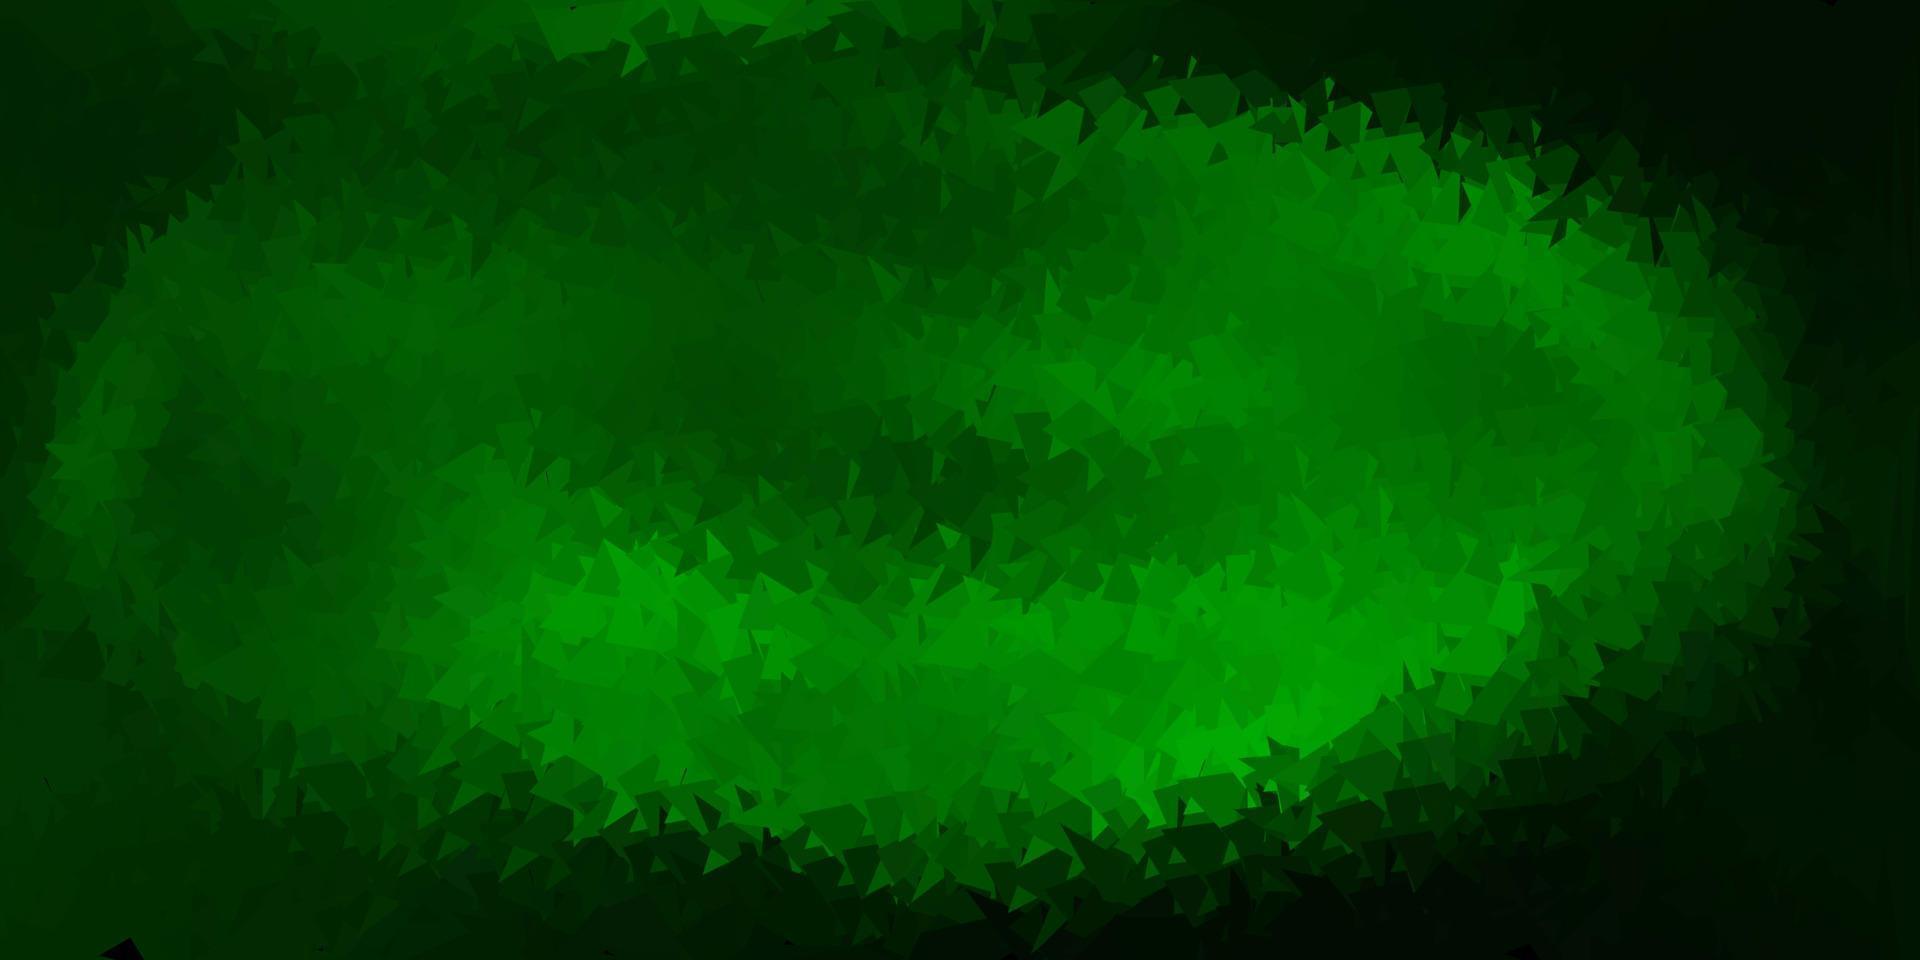 diseño de polígono degradado vectorial verde oscuro. vector